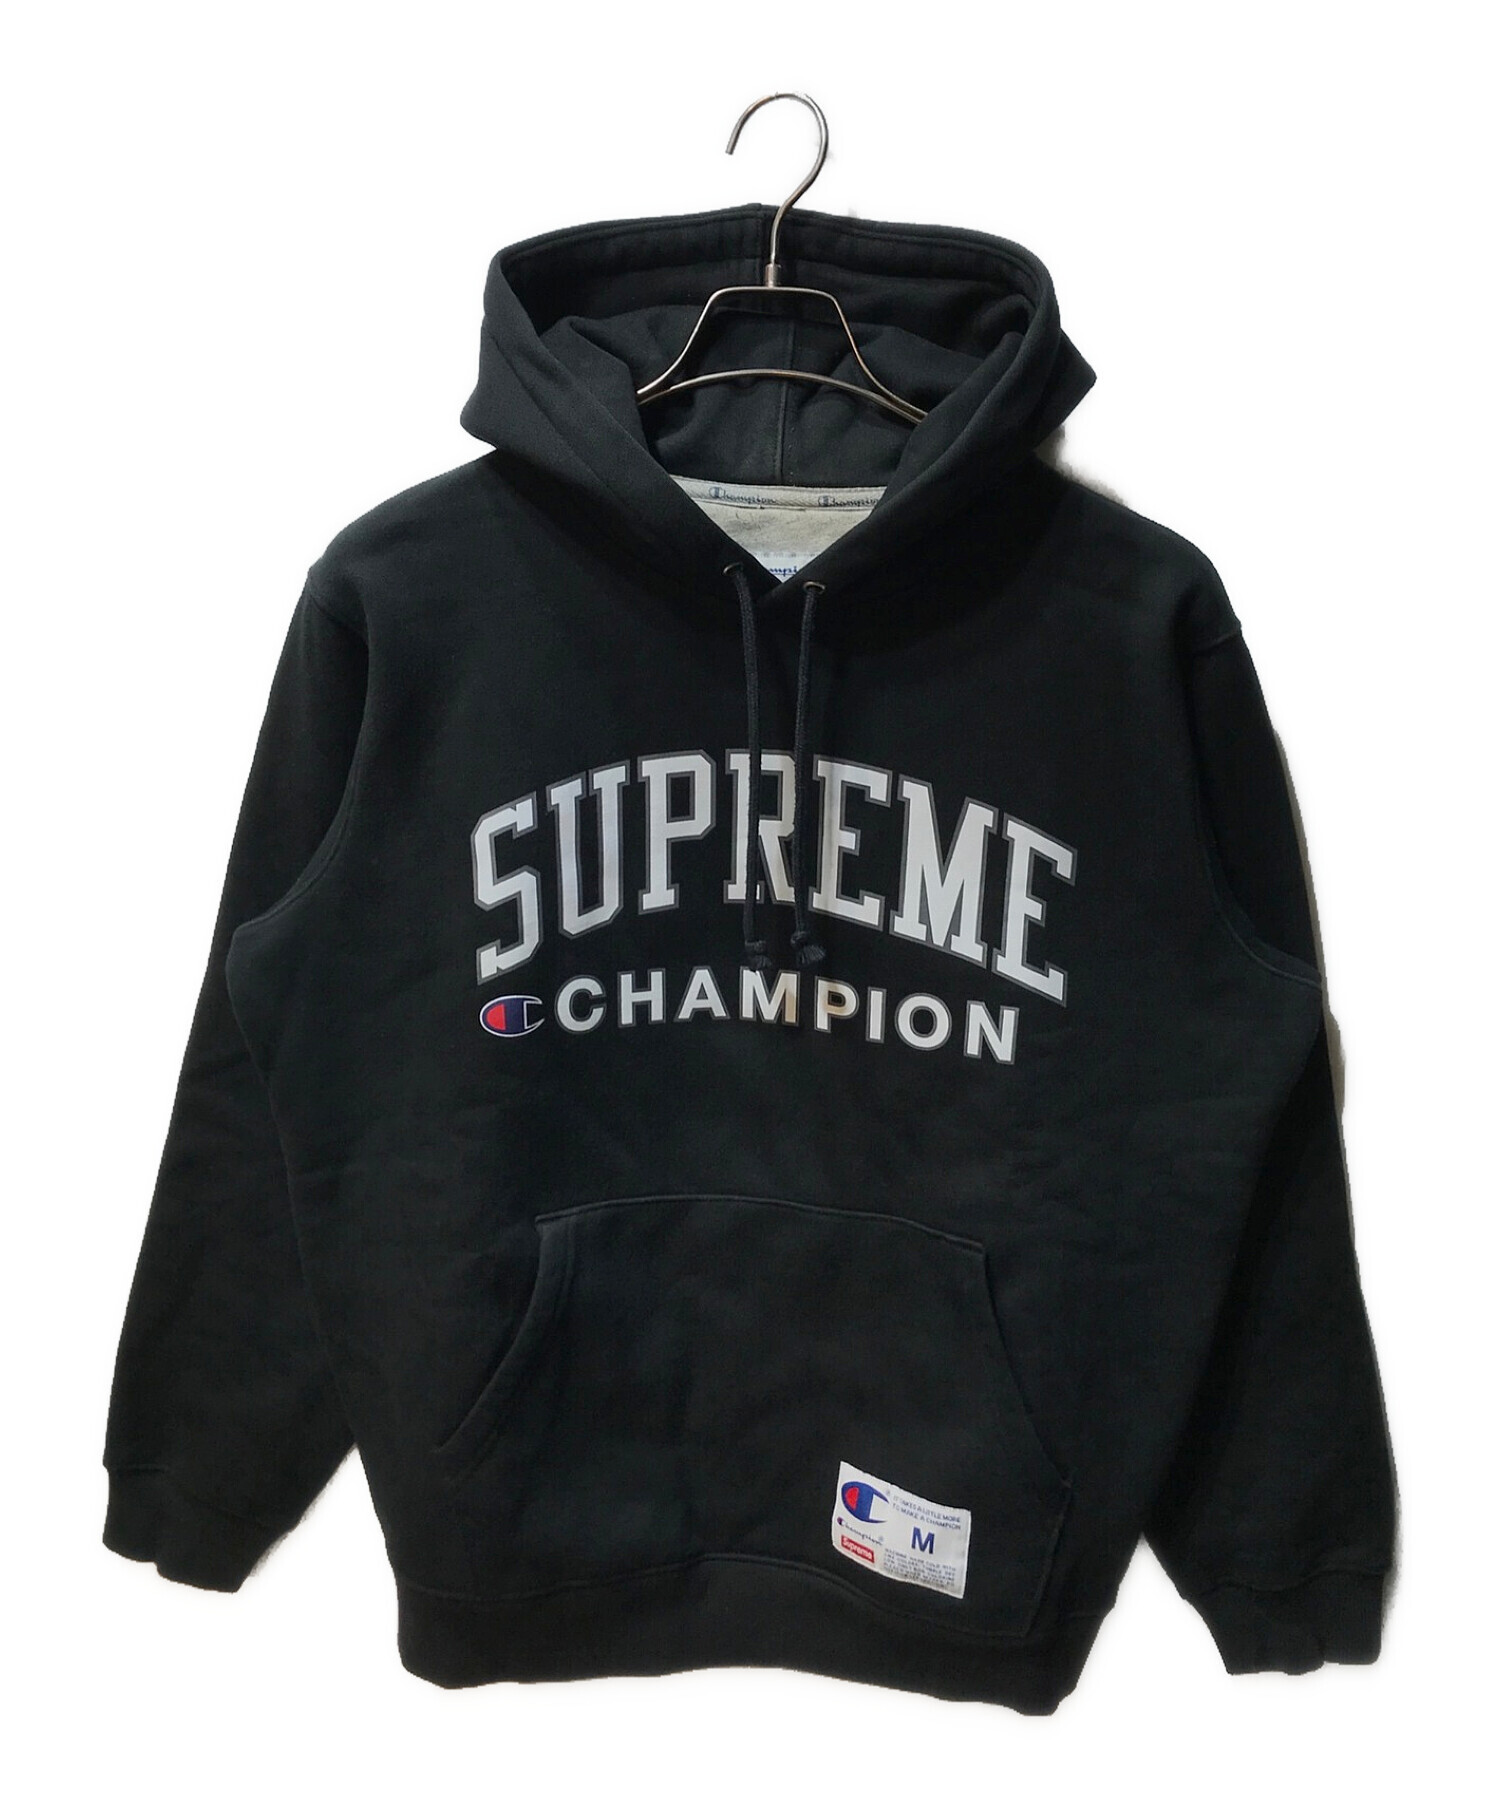 Supreme (シュプリーム) Champion (チャンピオン) 17SS Hooded Sweatshirt ブラック サイズ:Ｍ